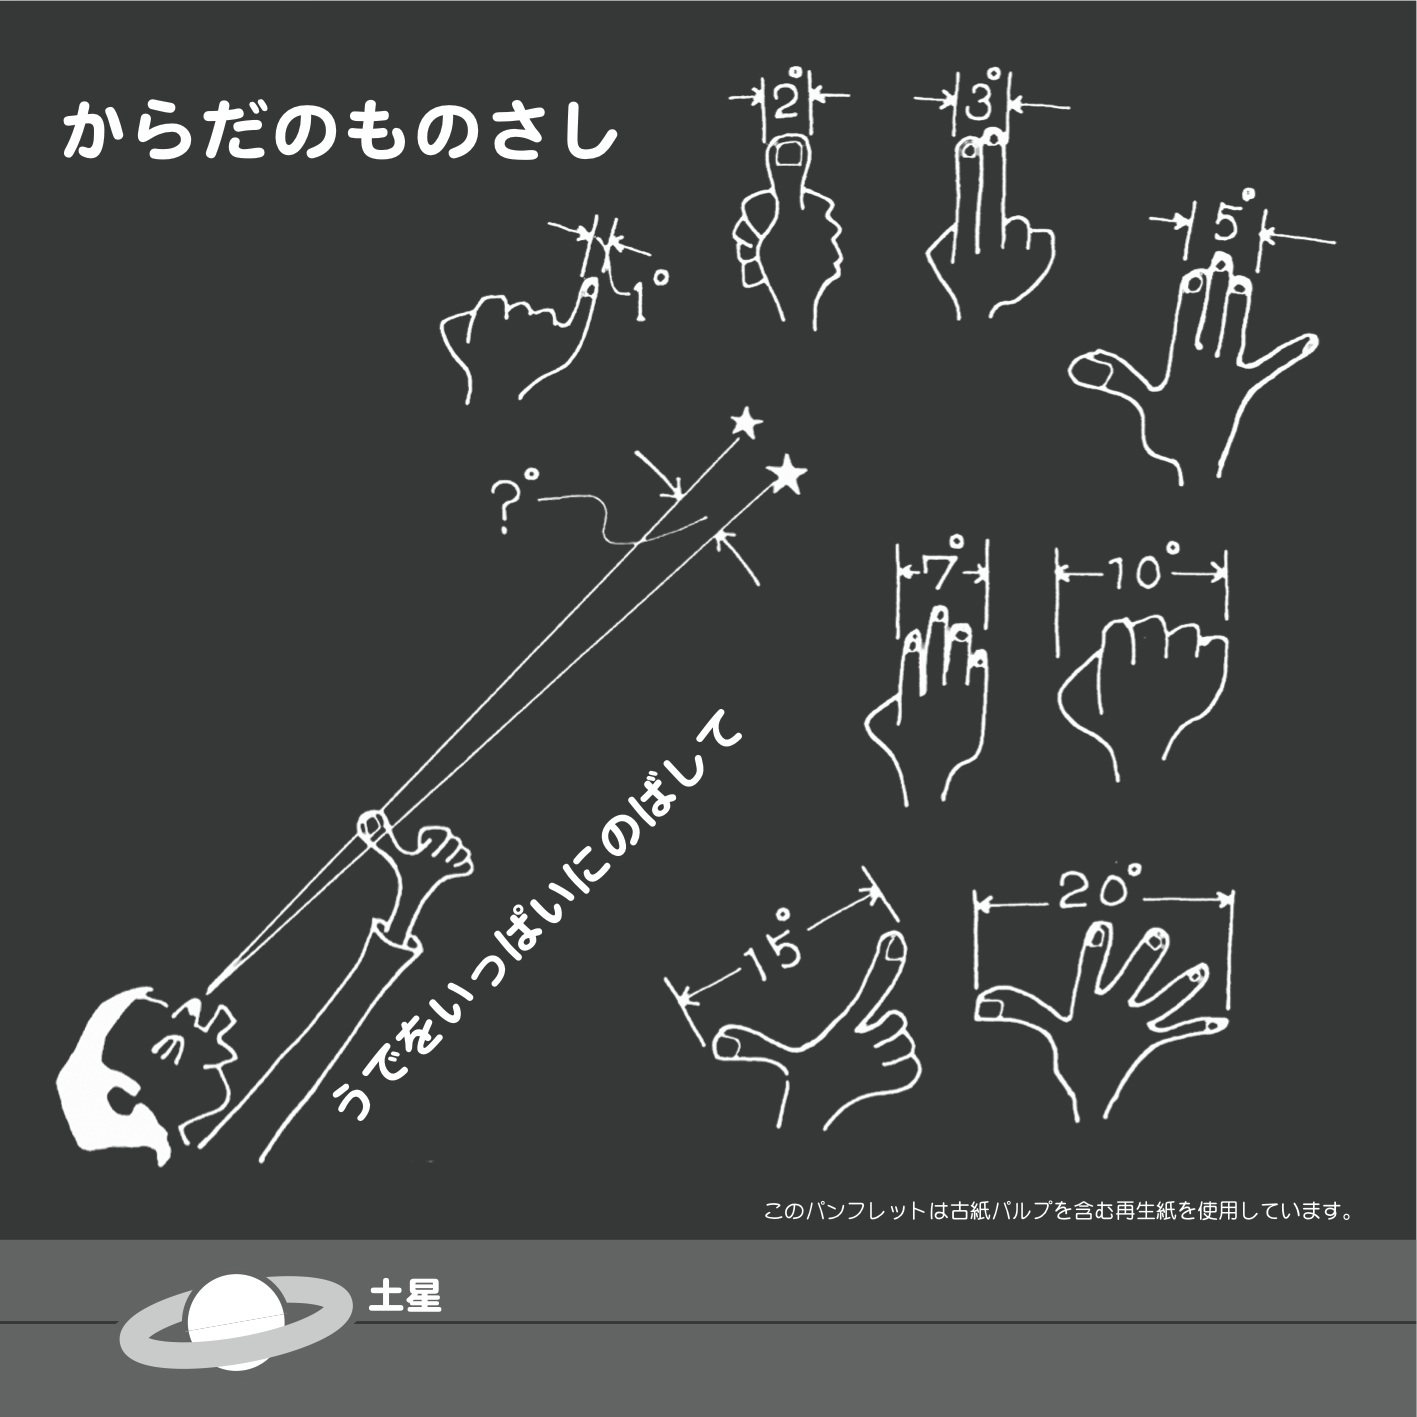 http://www.ncsm.city.nagoya.jp/study/astro/P6_hand_protractor.jpg